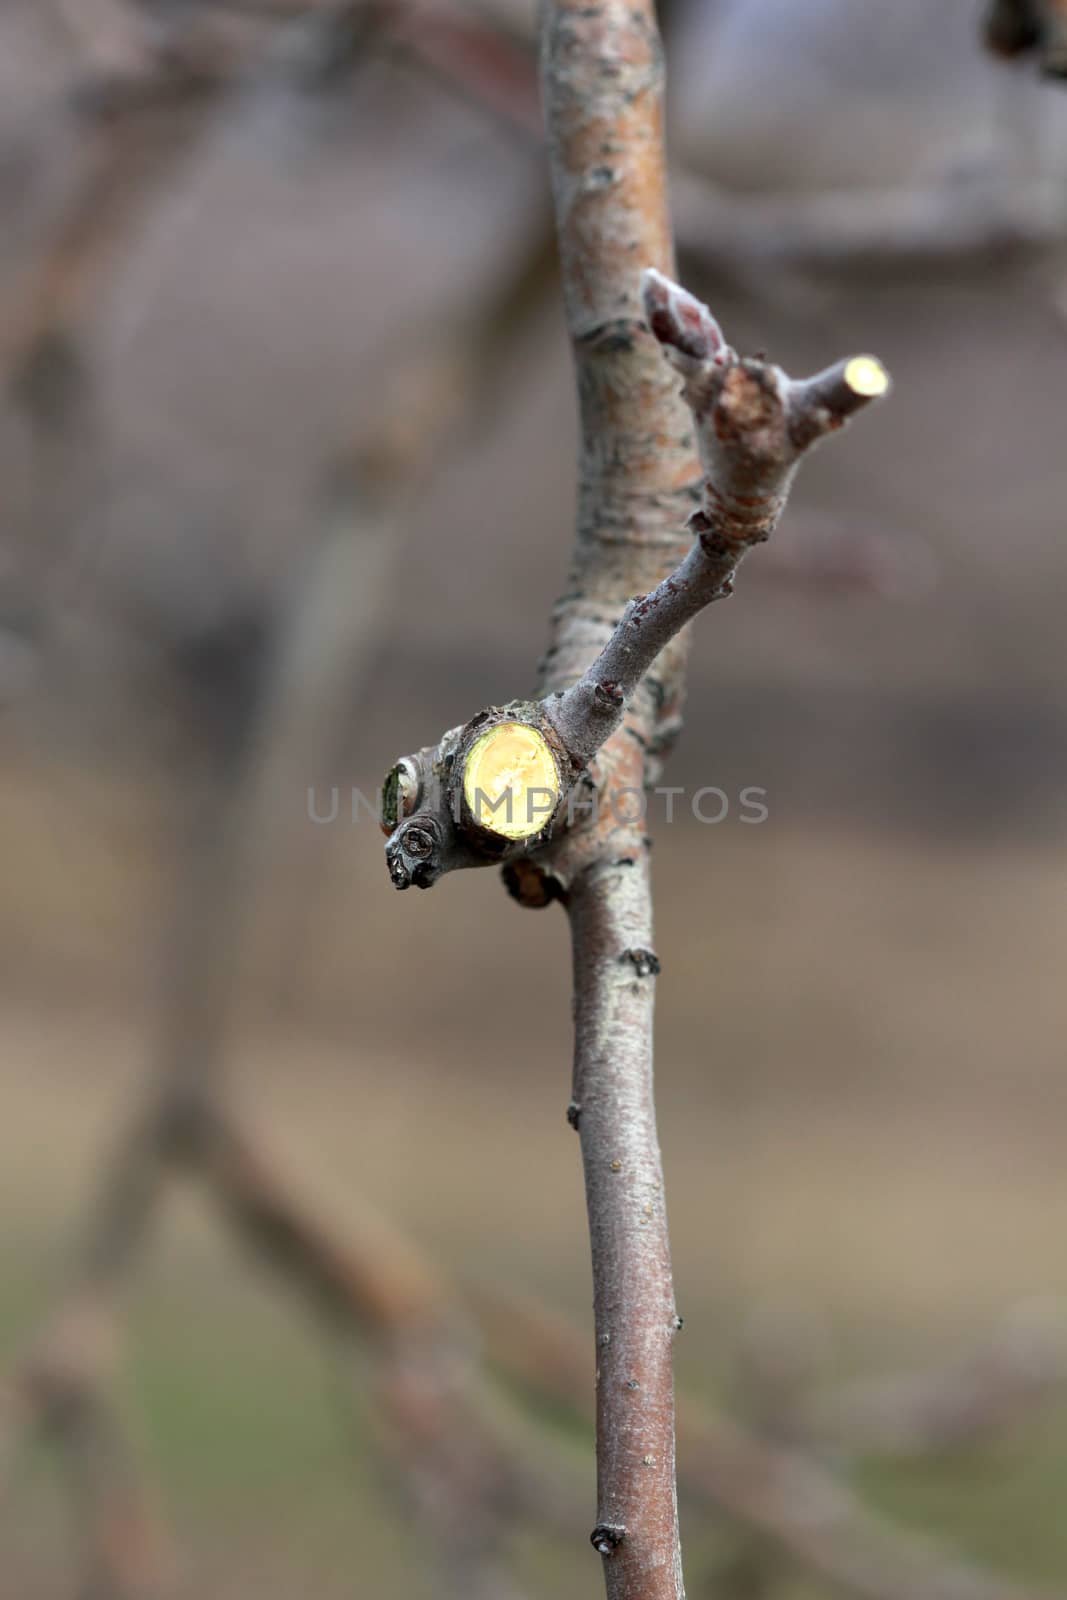 Pruned apple tree by nehru